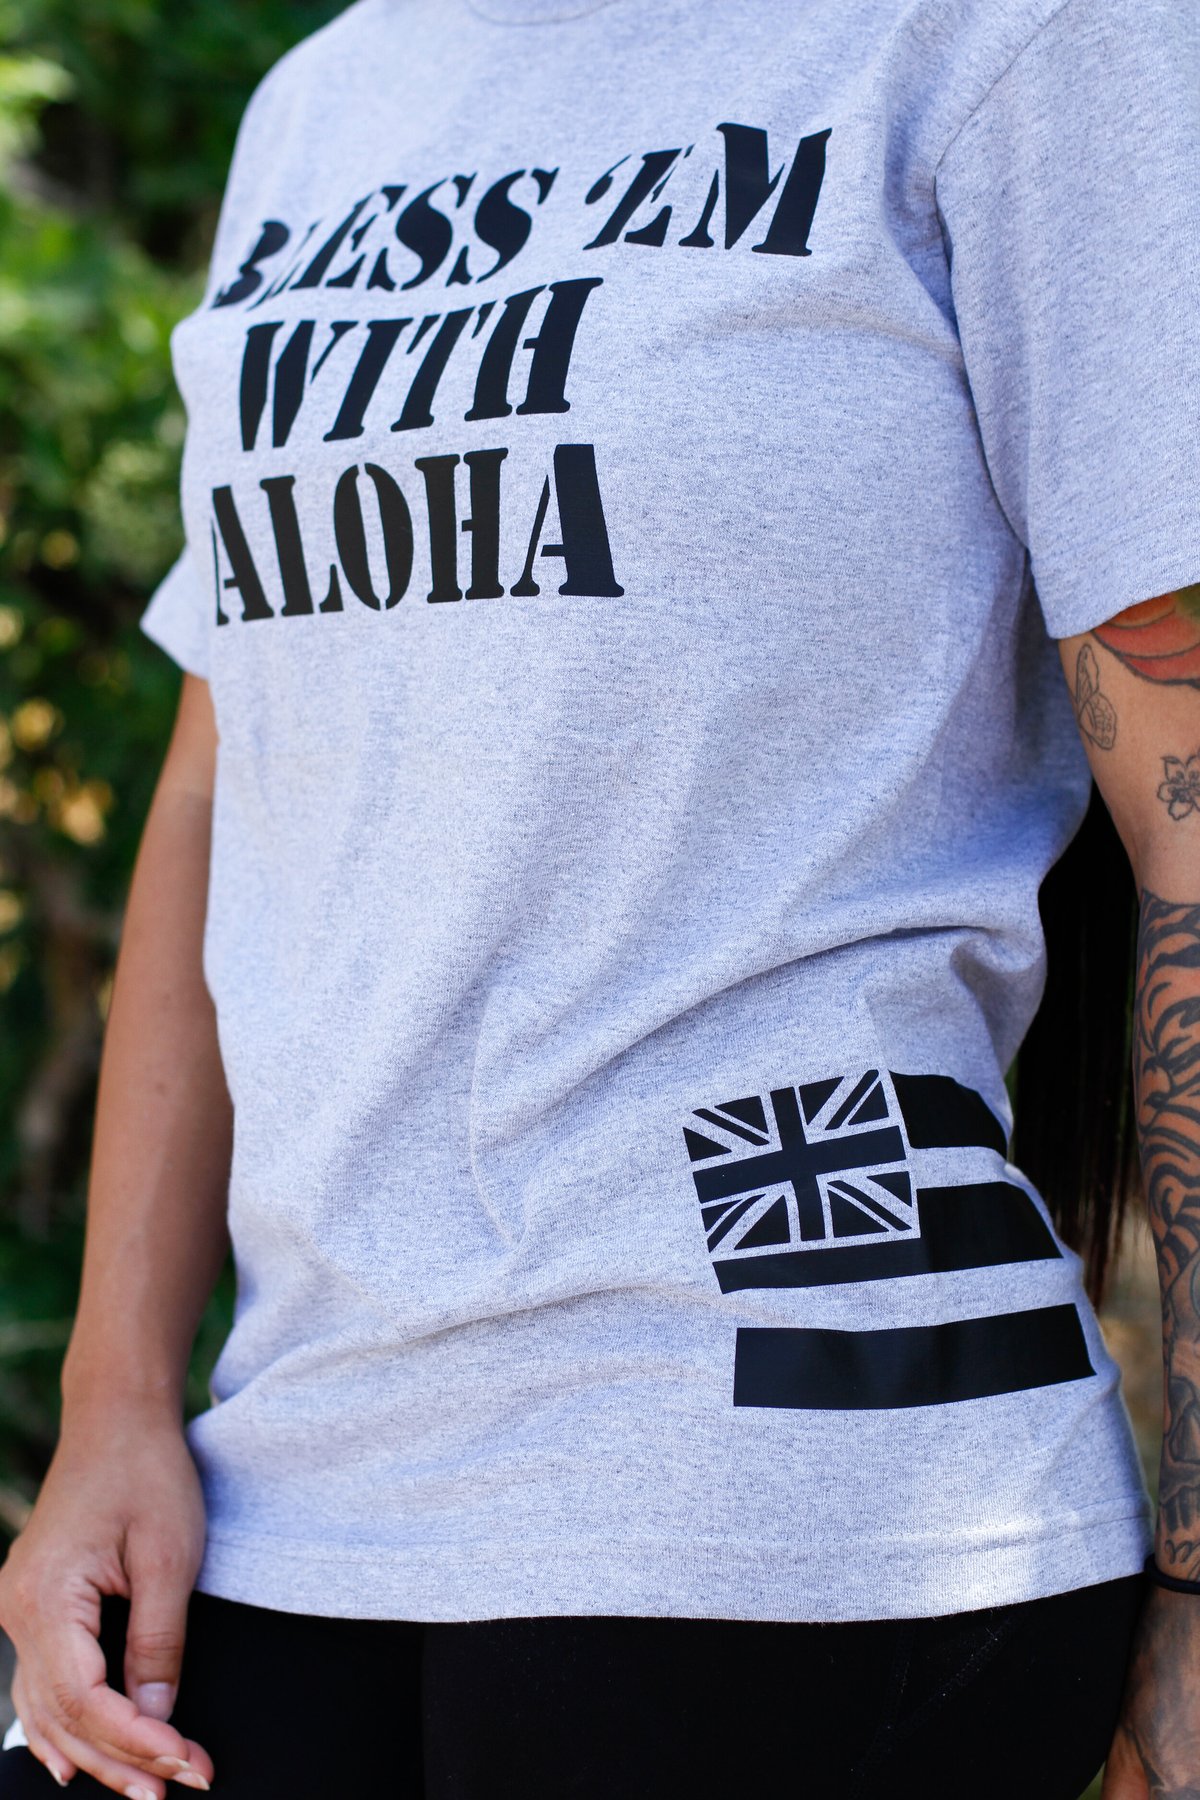 Bless Em With Aloha (Athletic Grey/Black)